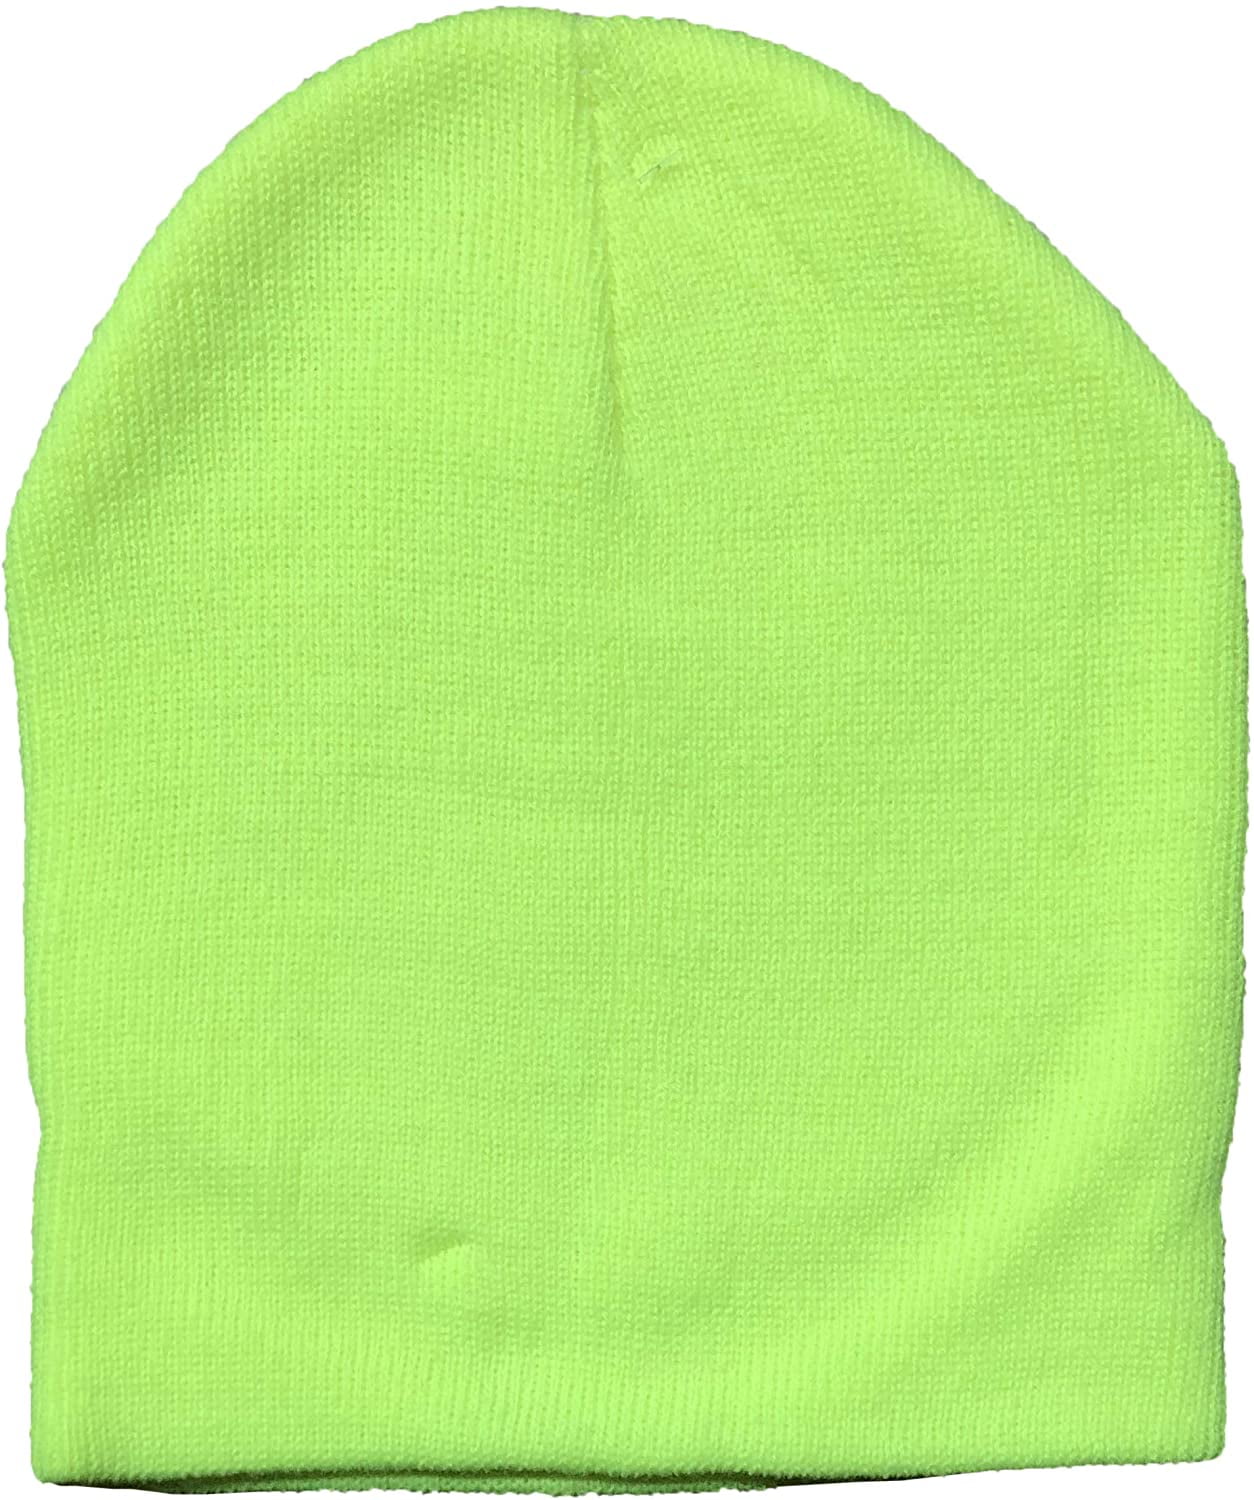 4 PK Neon Details about   Kids Winter Beanie Hat Assorted Colors Bulk Pack Warm Acrylic Cap 